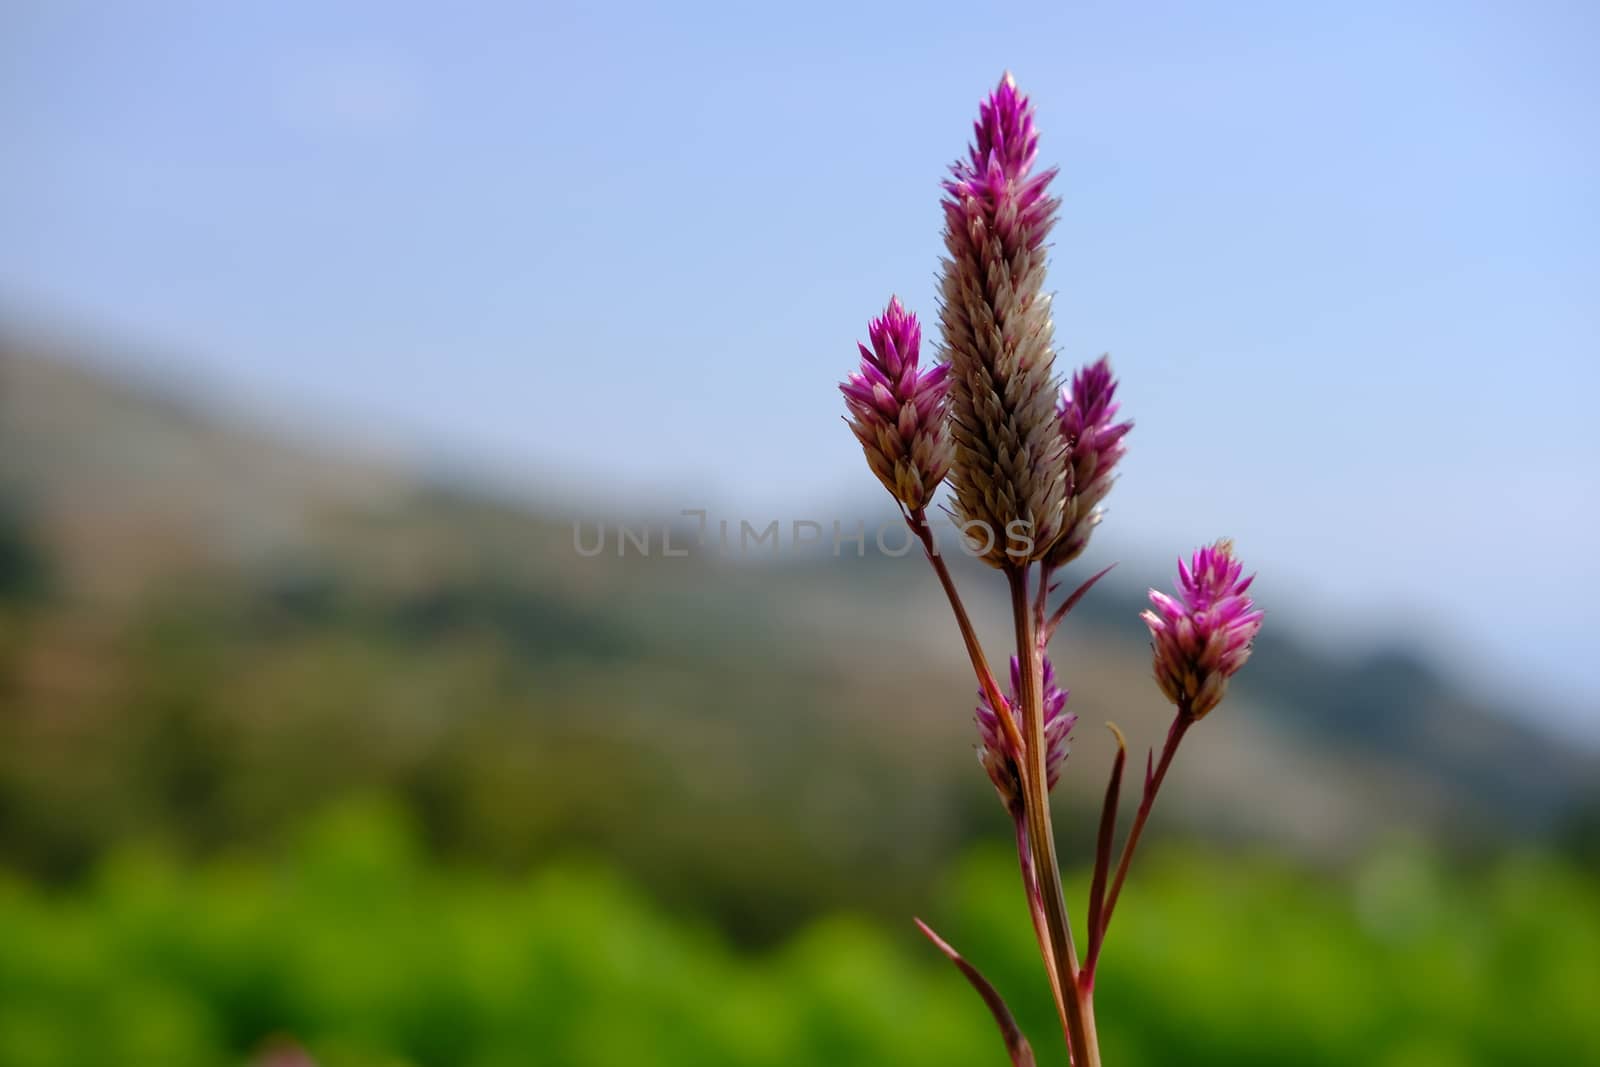 celosia argentea L. flower with dreamy background. Image photo